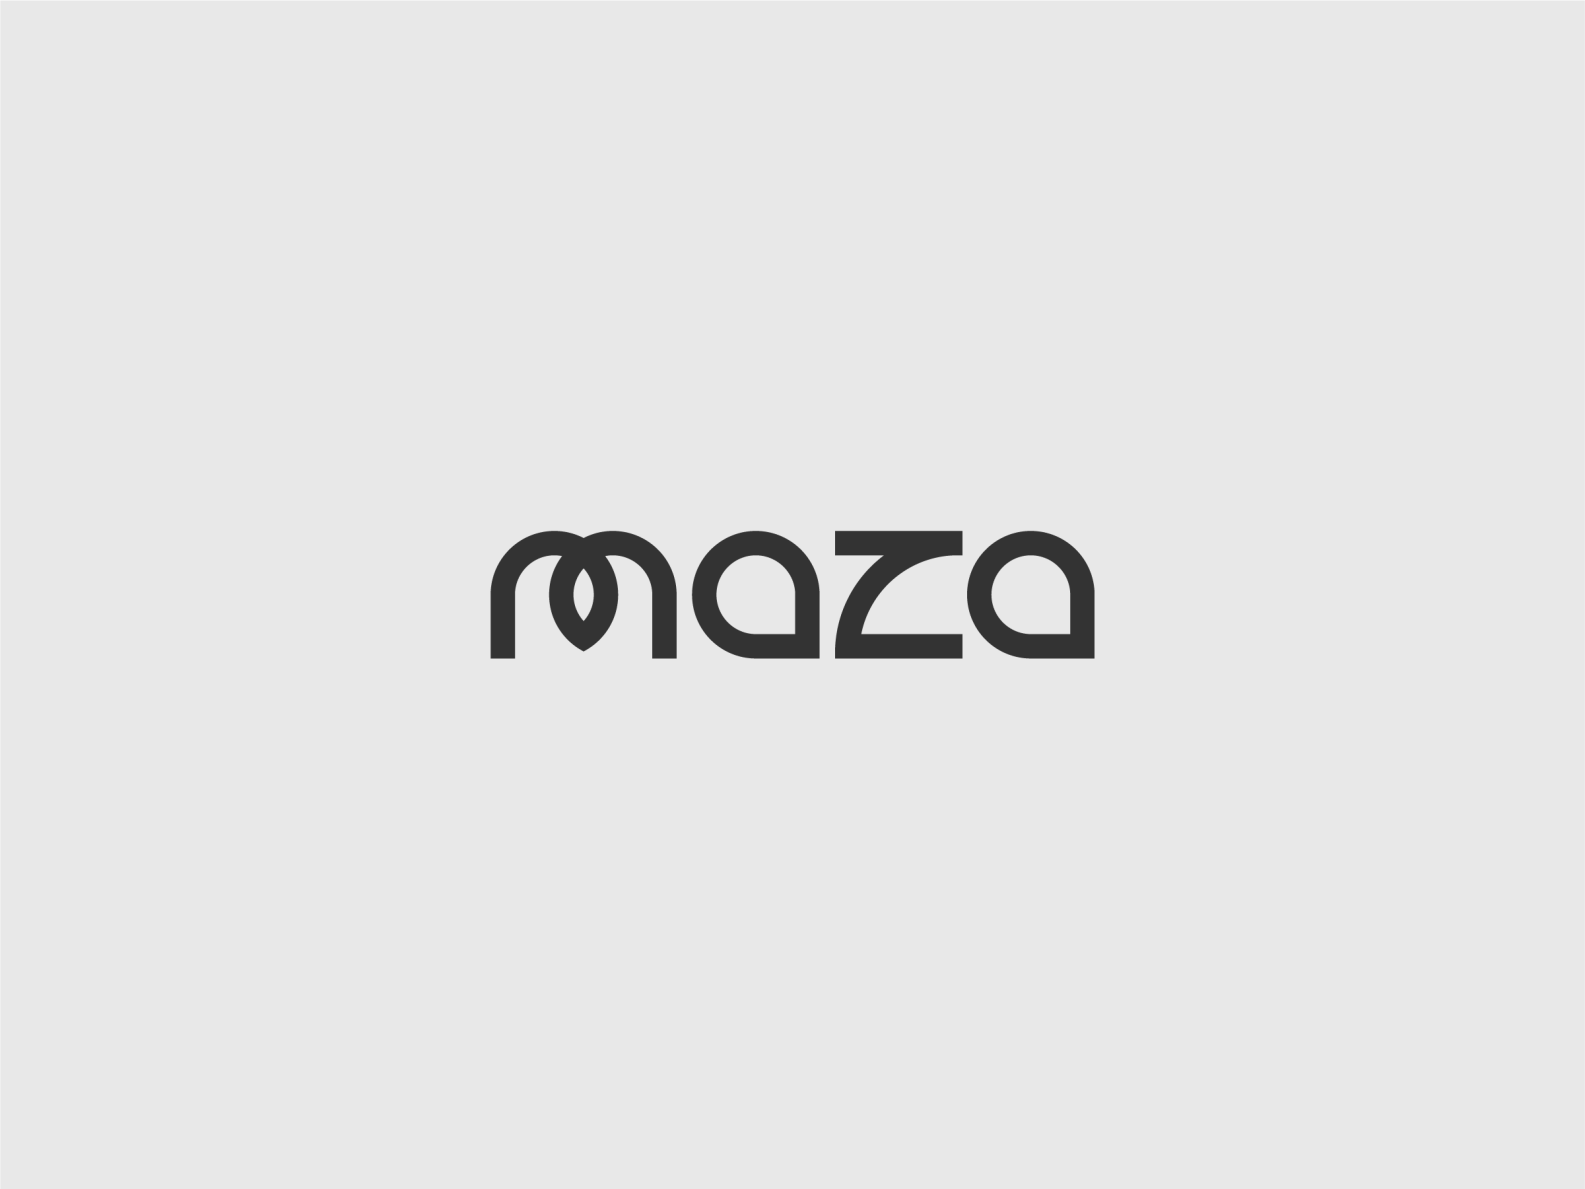 Banana - Maaza - 33 cl